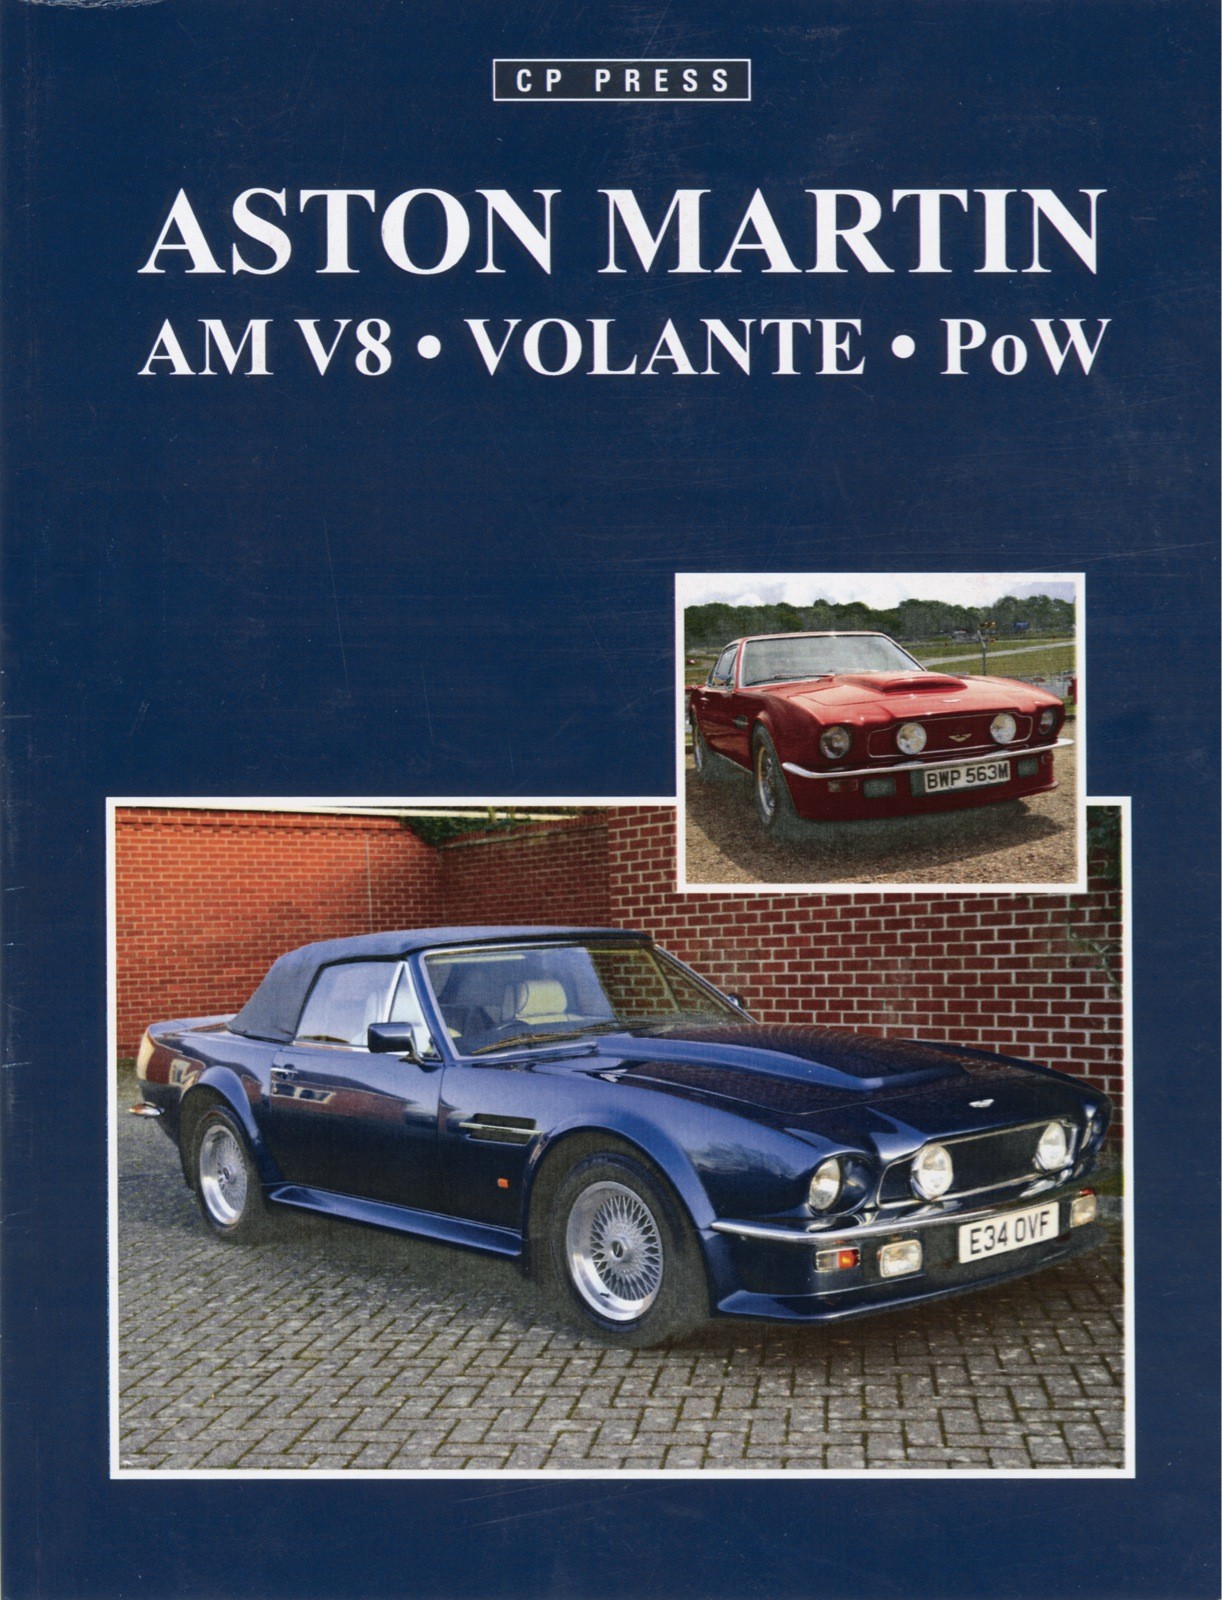 Aston Martin AM V8 - Volante - Pow